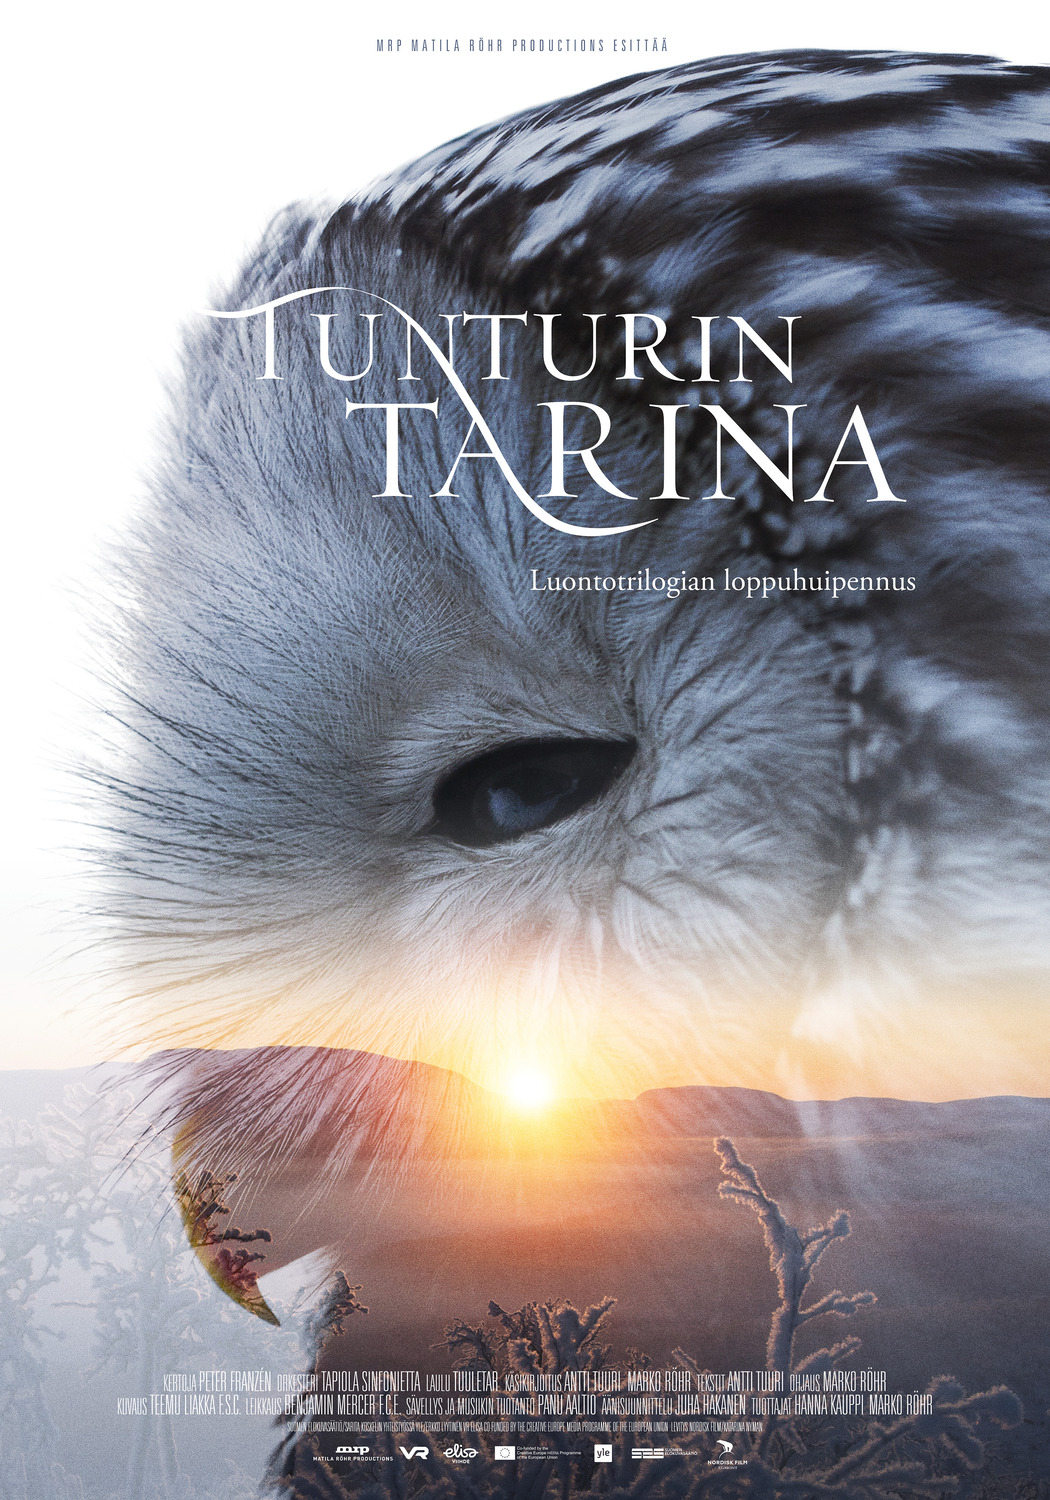 Extra Large Movie Poster Image for Tunturin tarina 